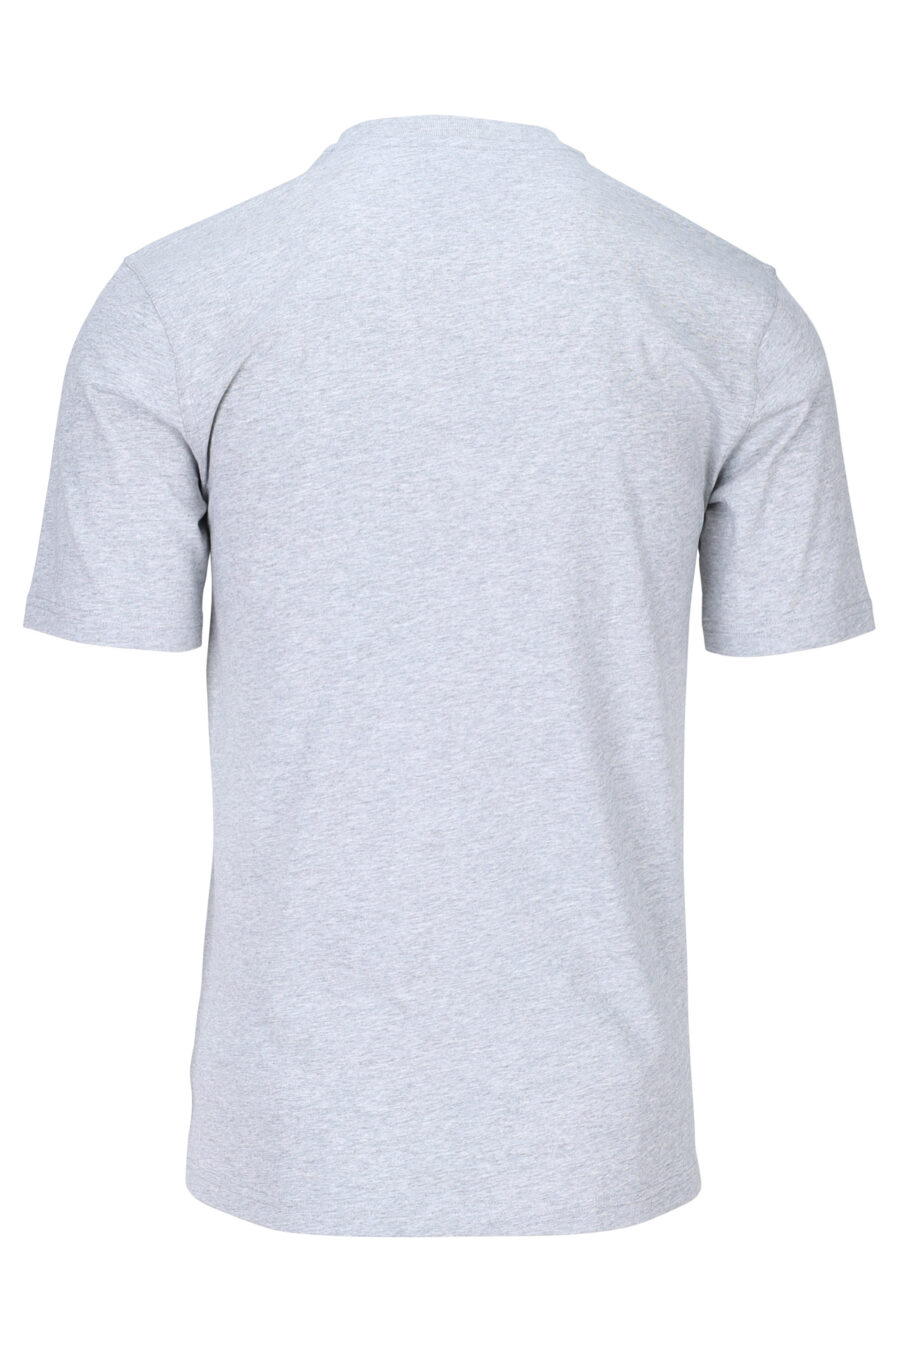 T-shirt cinzenta com minilogo "teddy tailor" - 667113150802 1